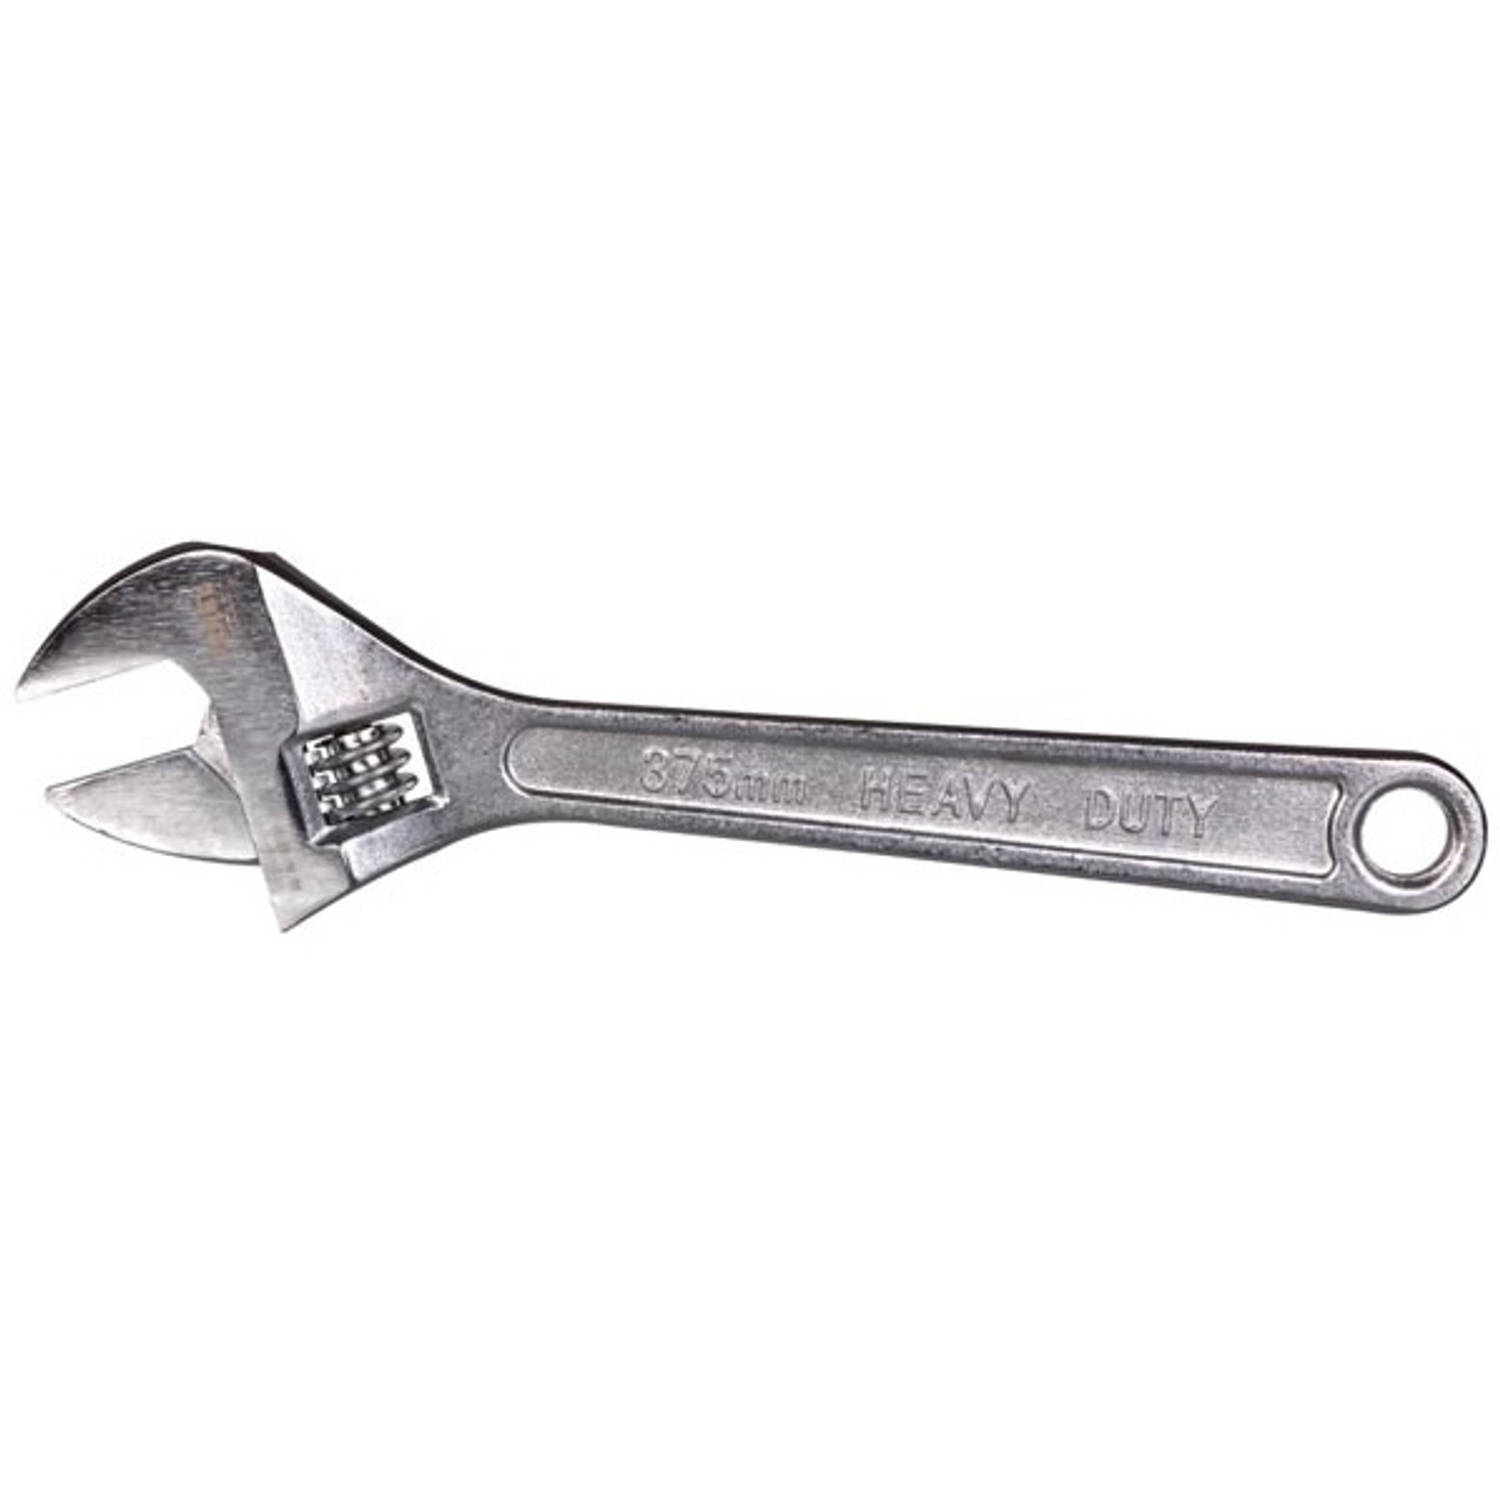 Perel Engelse sleutel 15"" 37,5 cm carbon-staal zilver/zwart